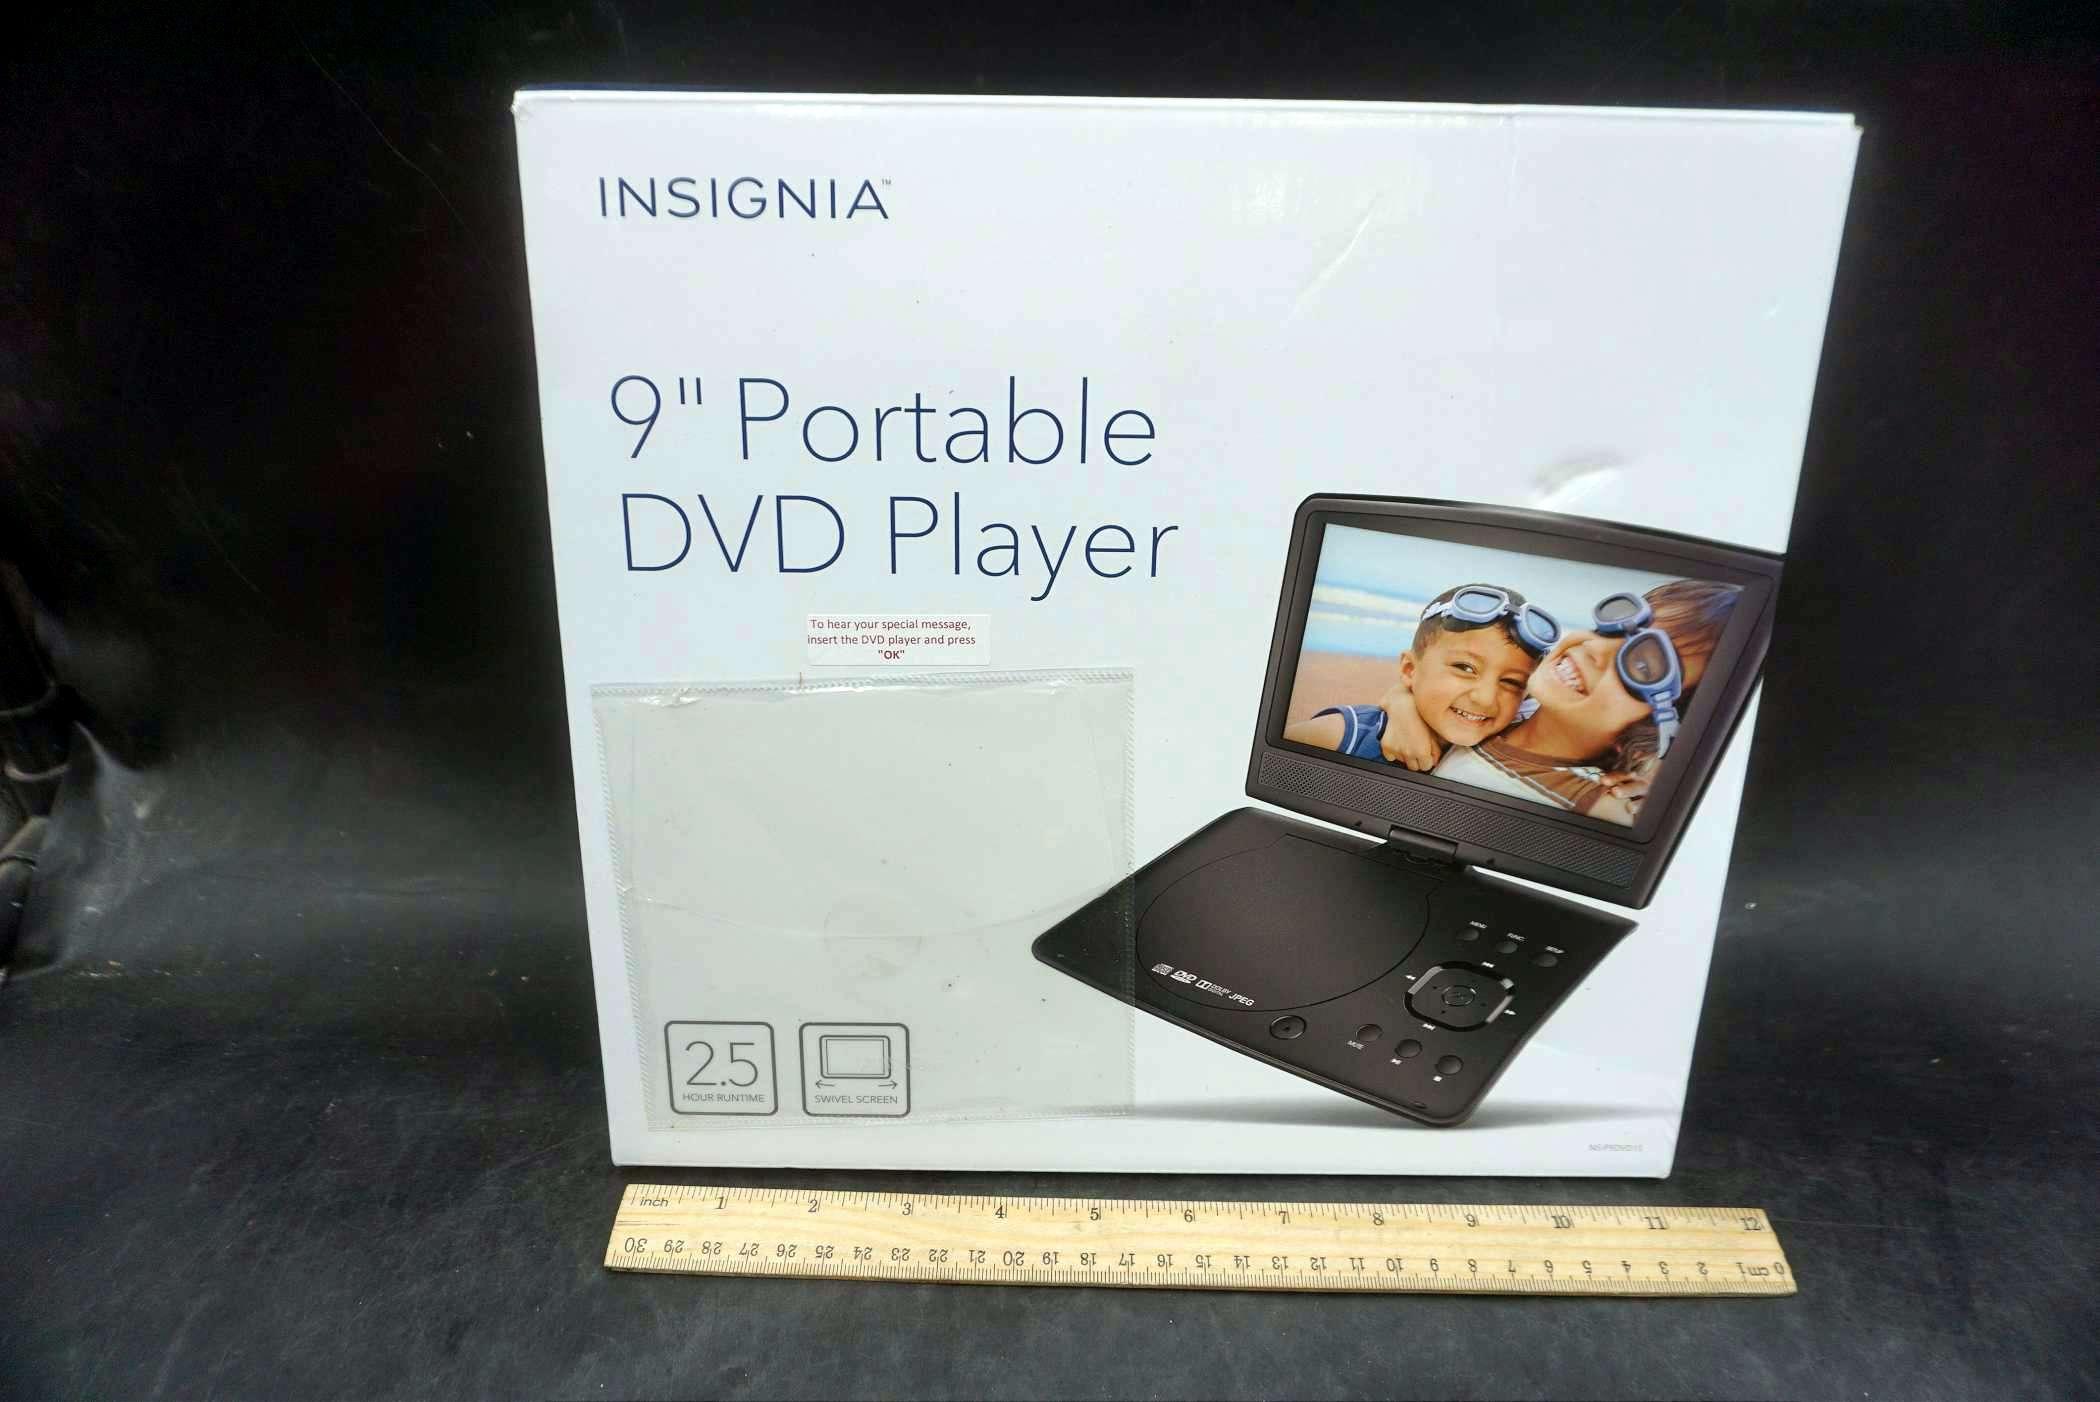 Insignia 9" Portable Dvd Player